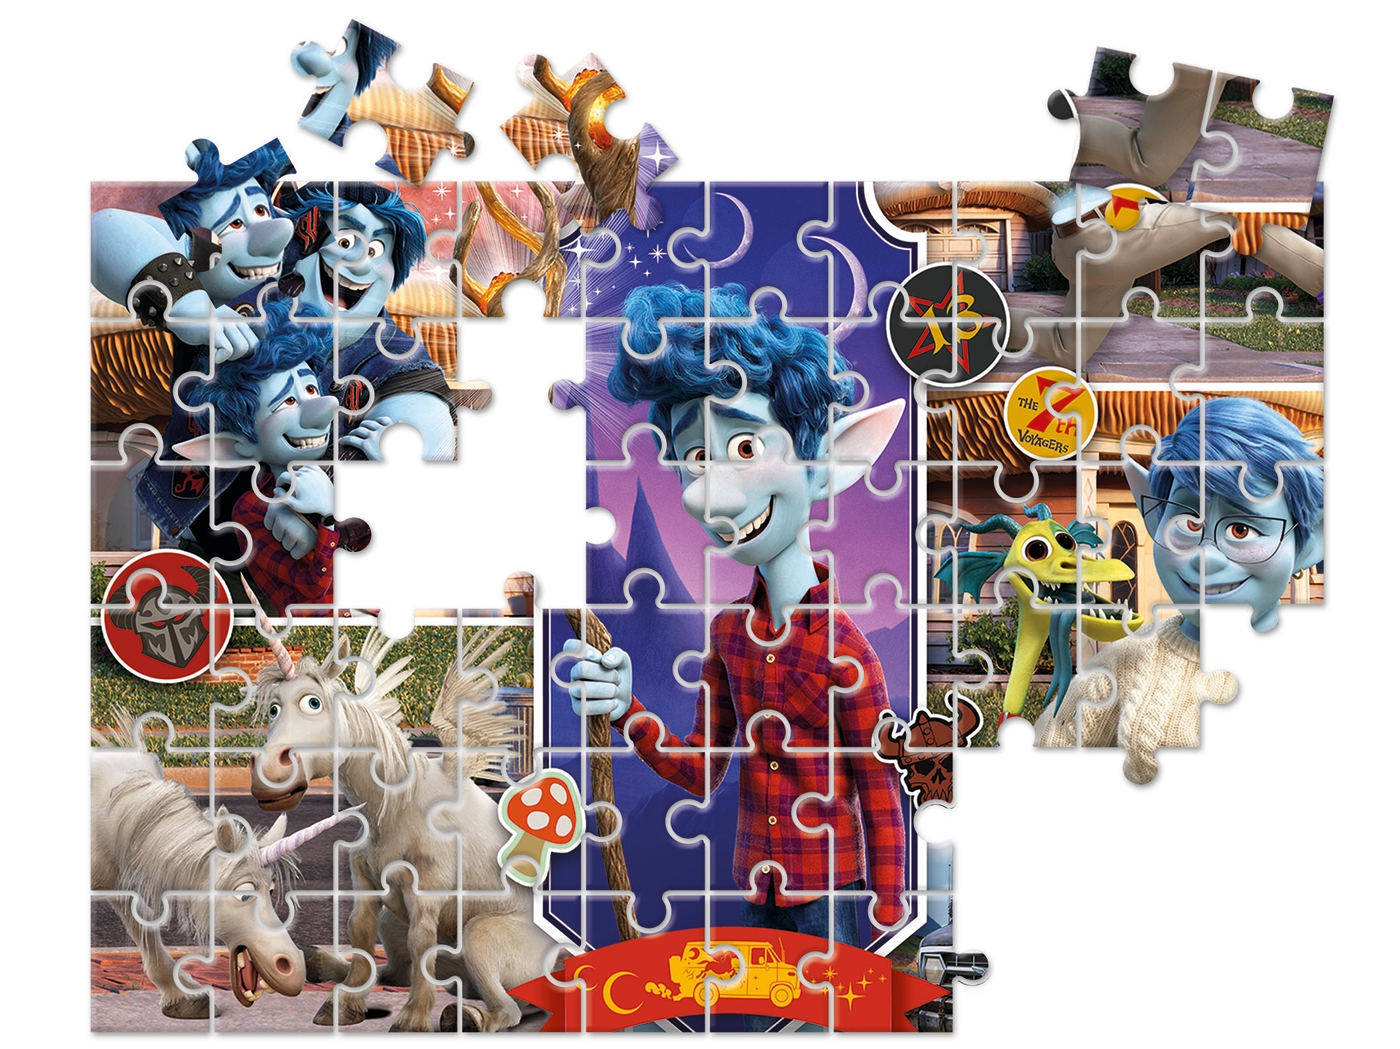 Disney Pixar Onward 60 Piece Jigsaw Puzzle From Clementoni Toys Games Jigsaws